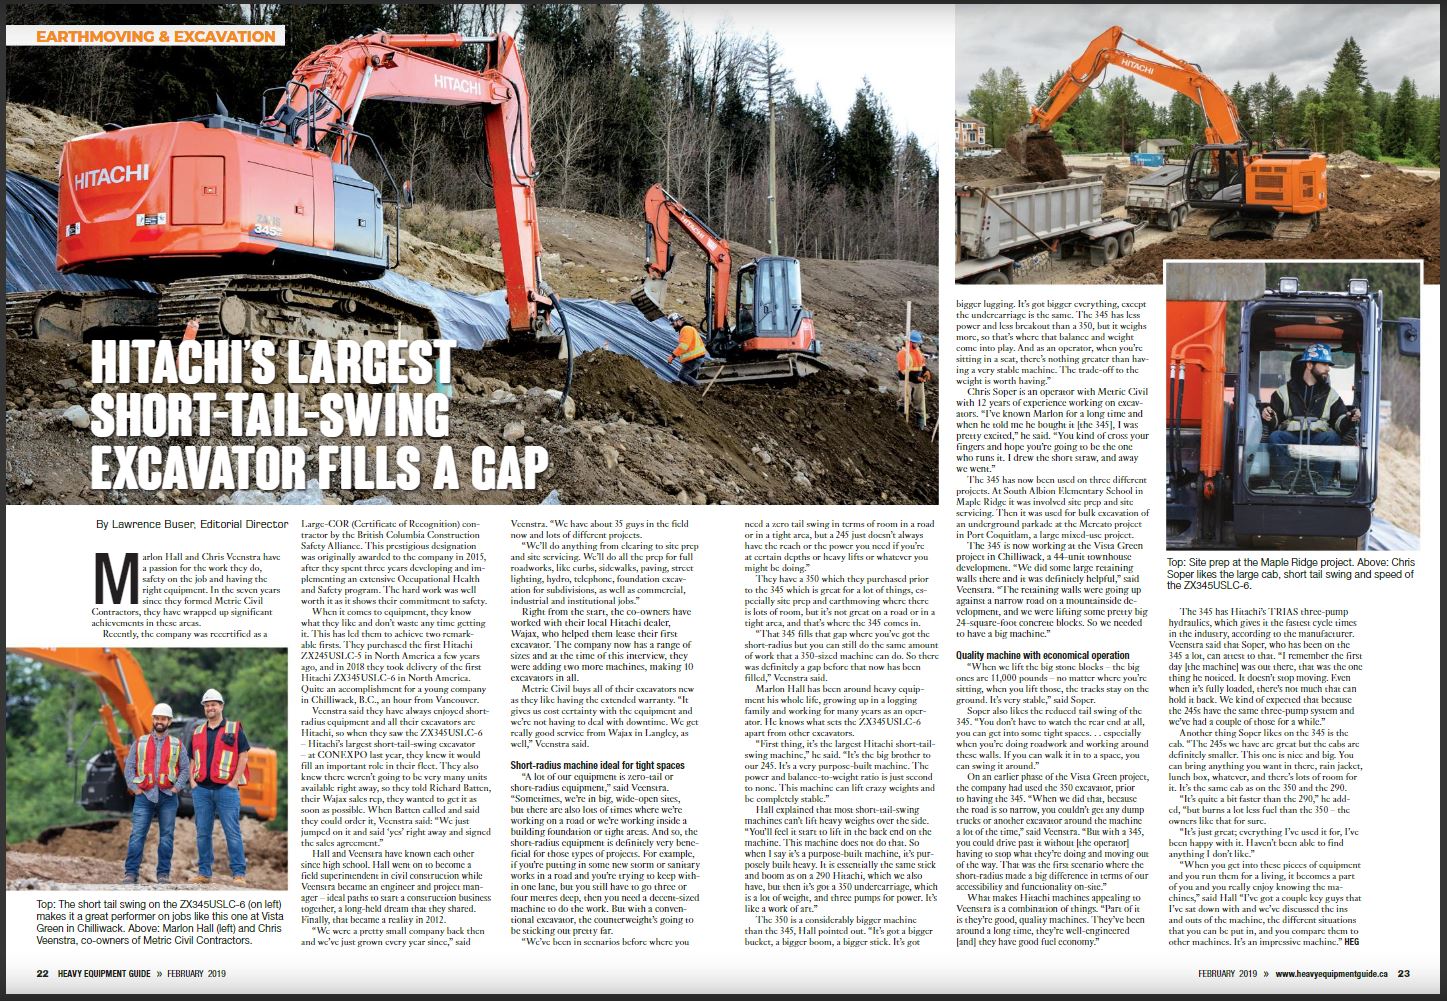 Metric heavy equipment excavation. Heavy Equipment magazine pages featuring Metric Civil's excavators.